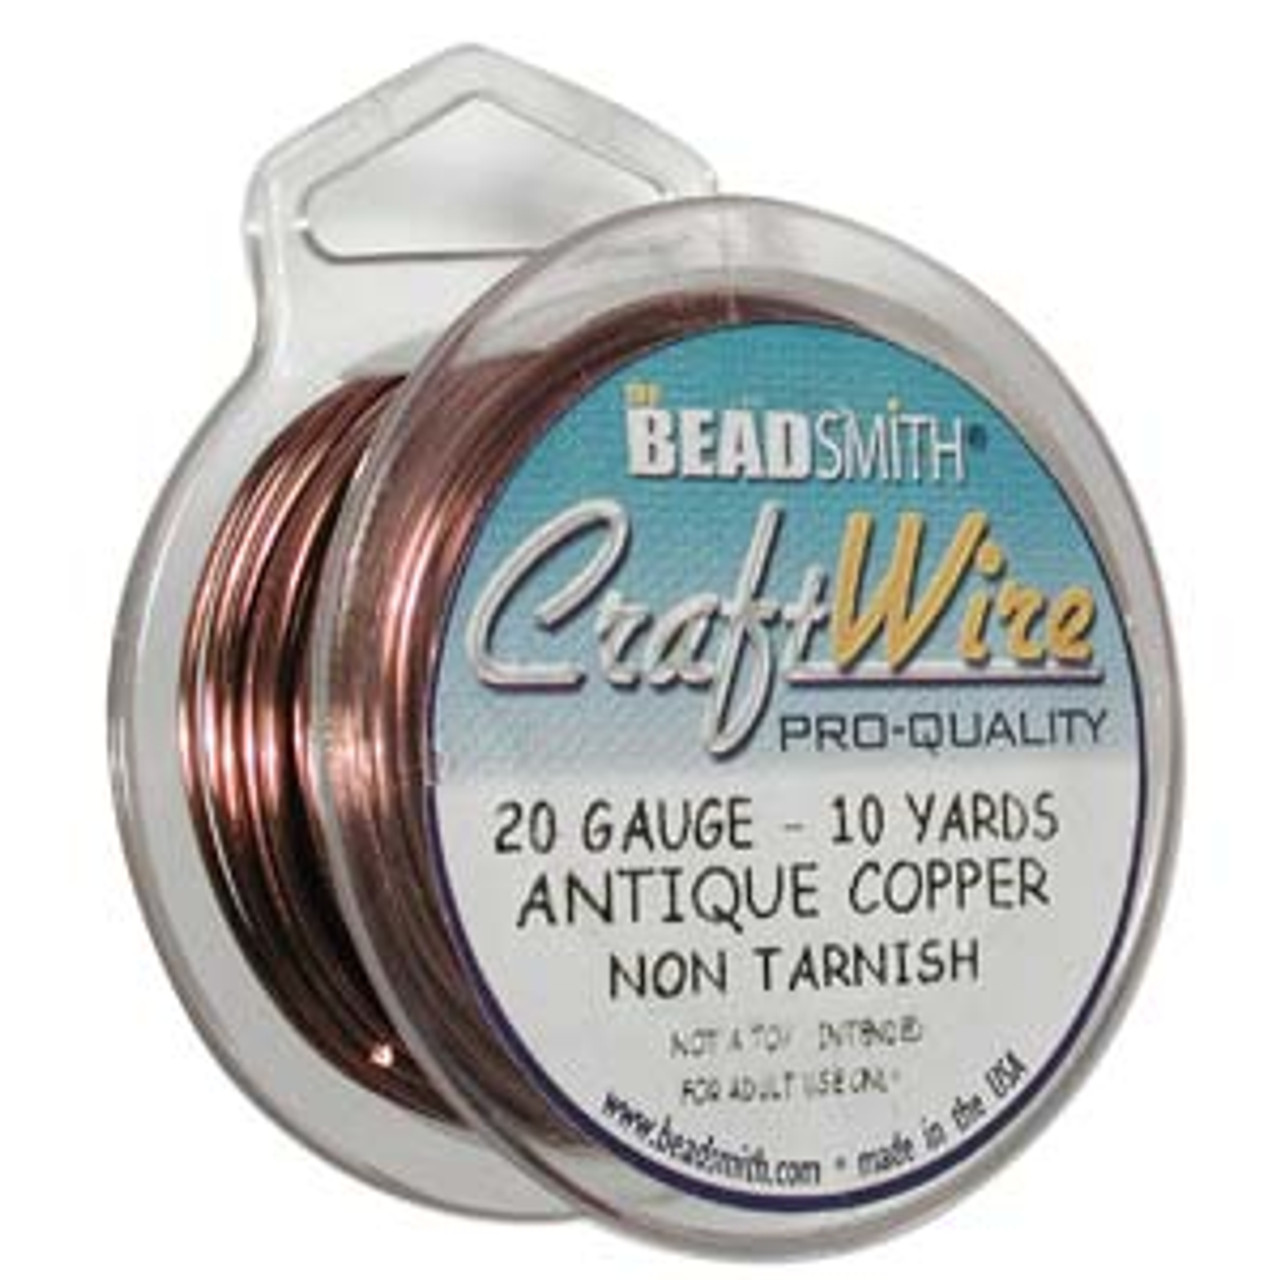 bead smith 28 gauge gold craft wire, craft wire, gold wire, jewelry wire,  28 gauge wire, gold, jewelry making wire, jewelry supplies, vintage